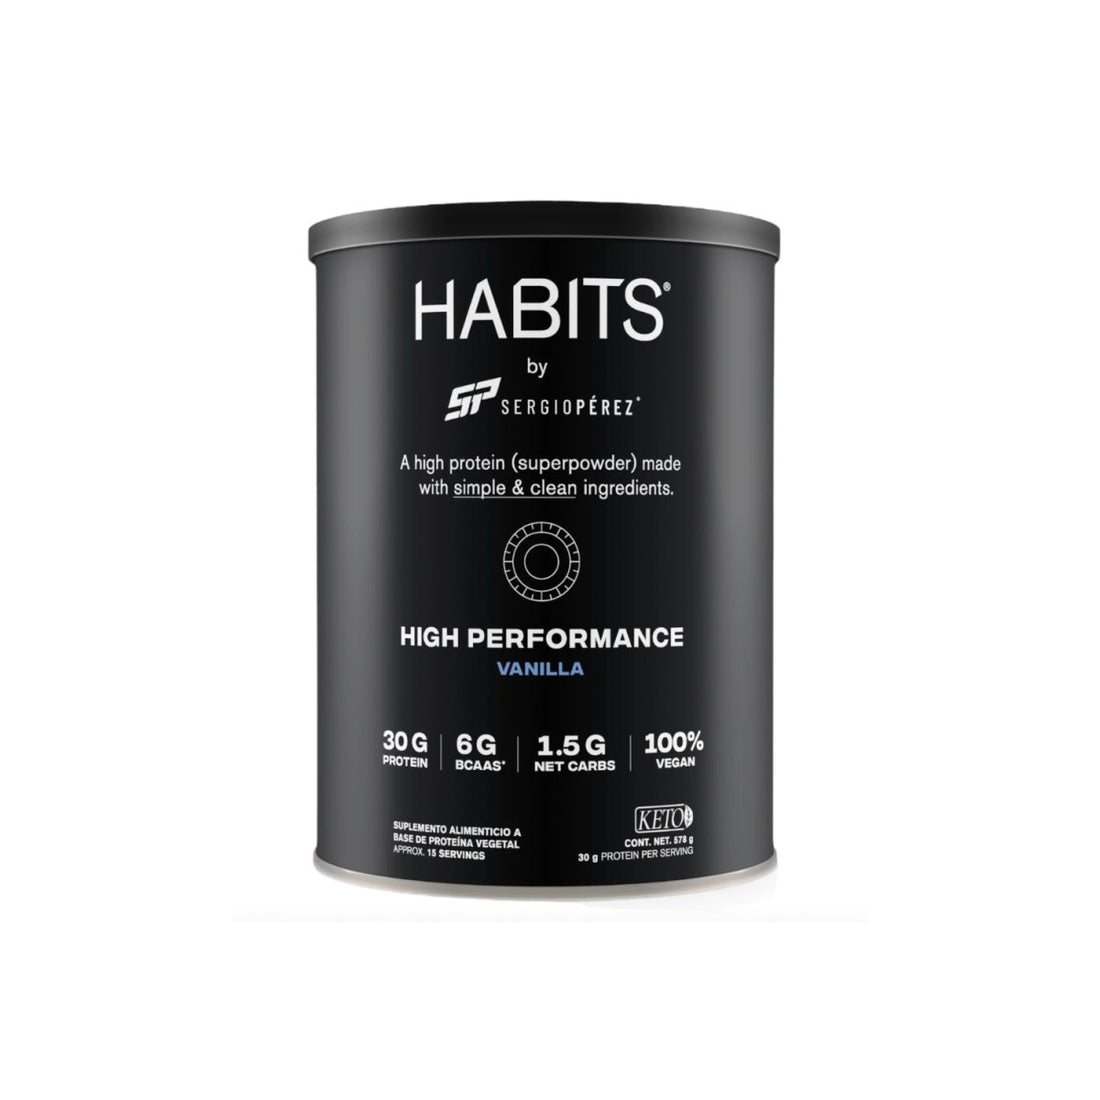 Habits High Performance - Good Express mx